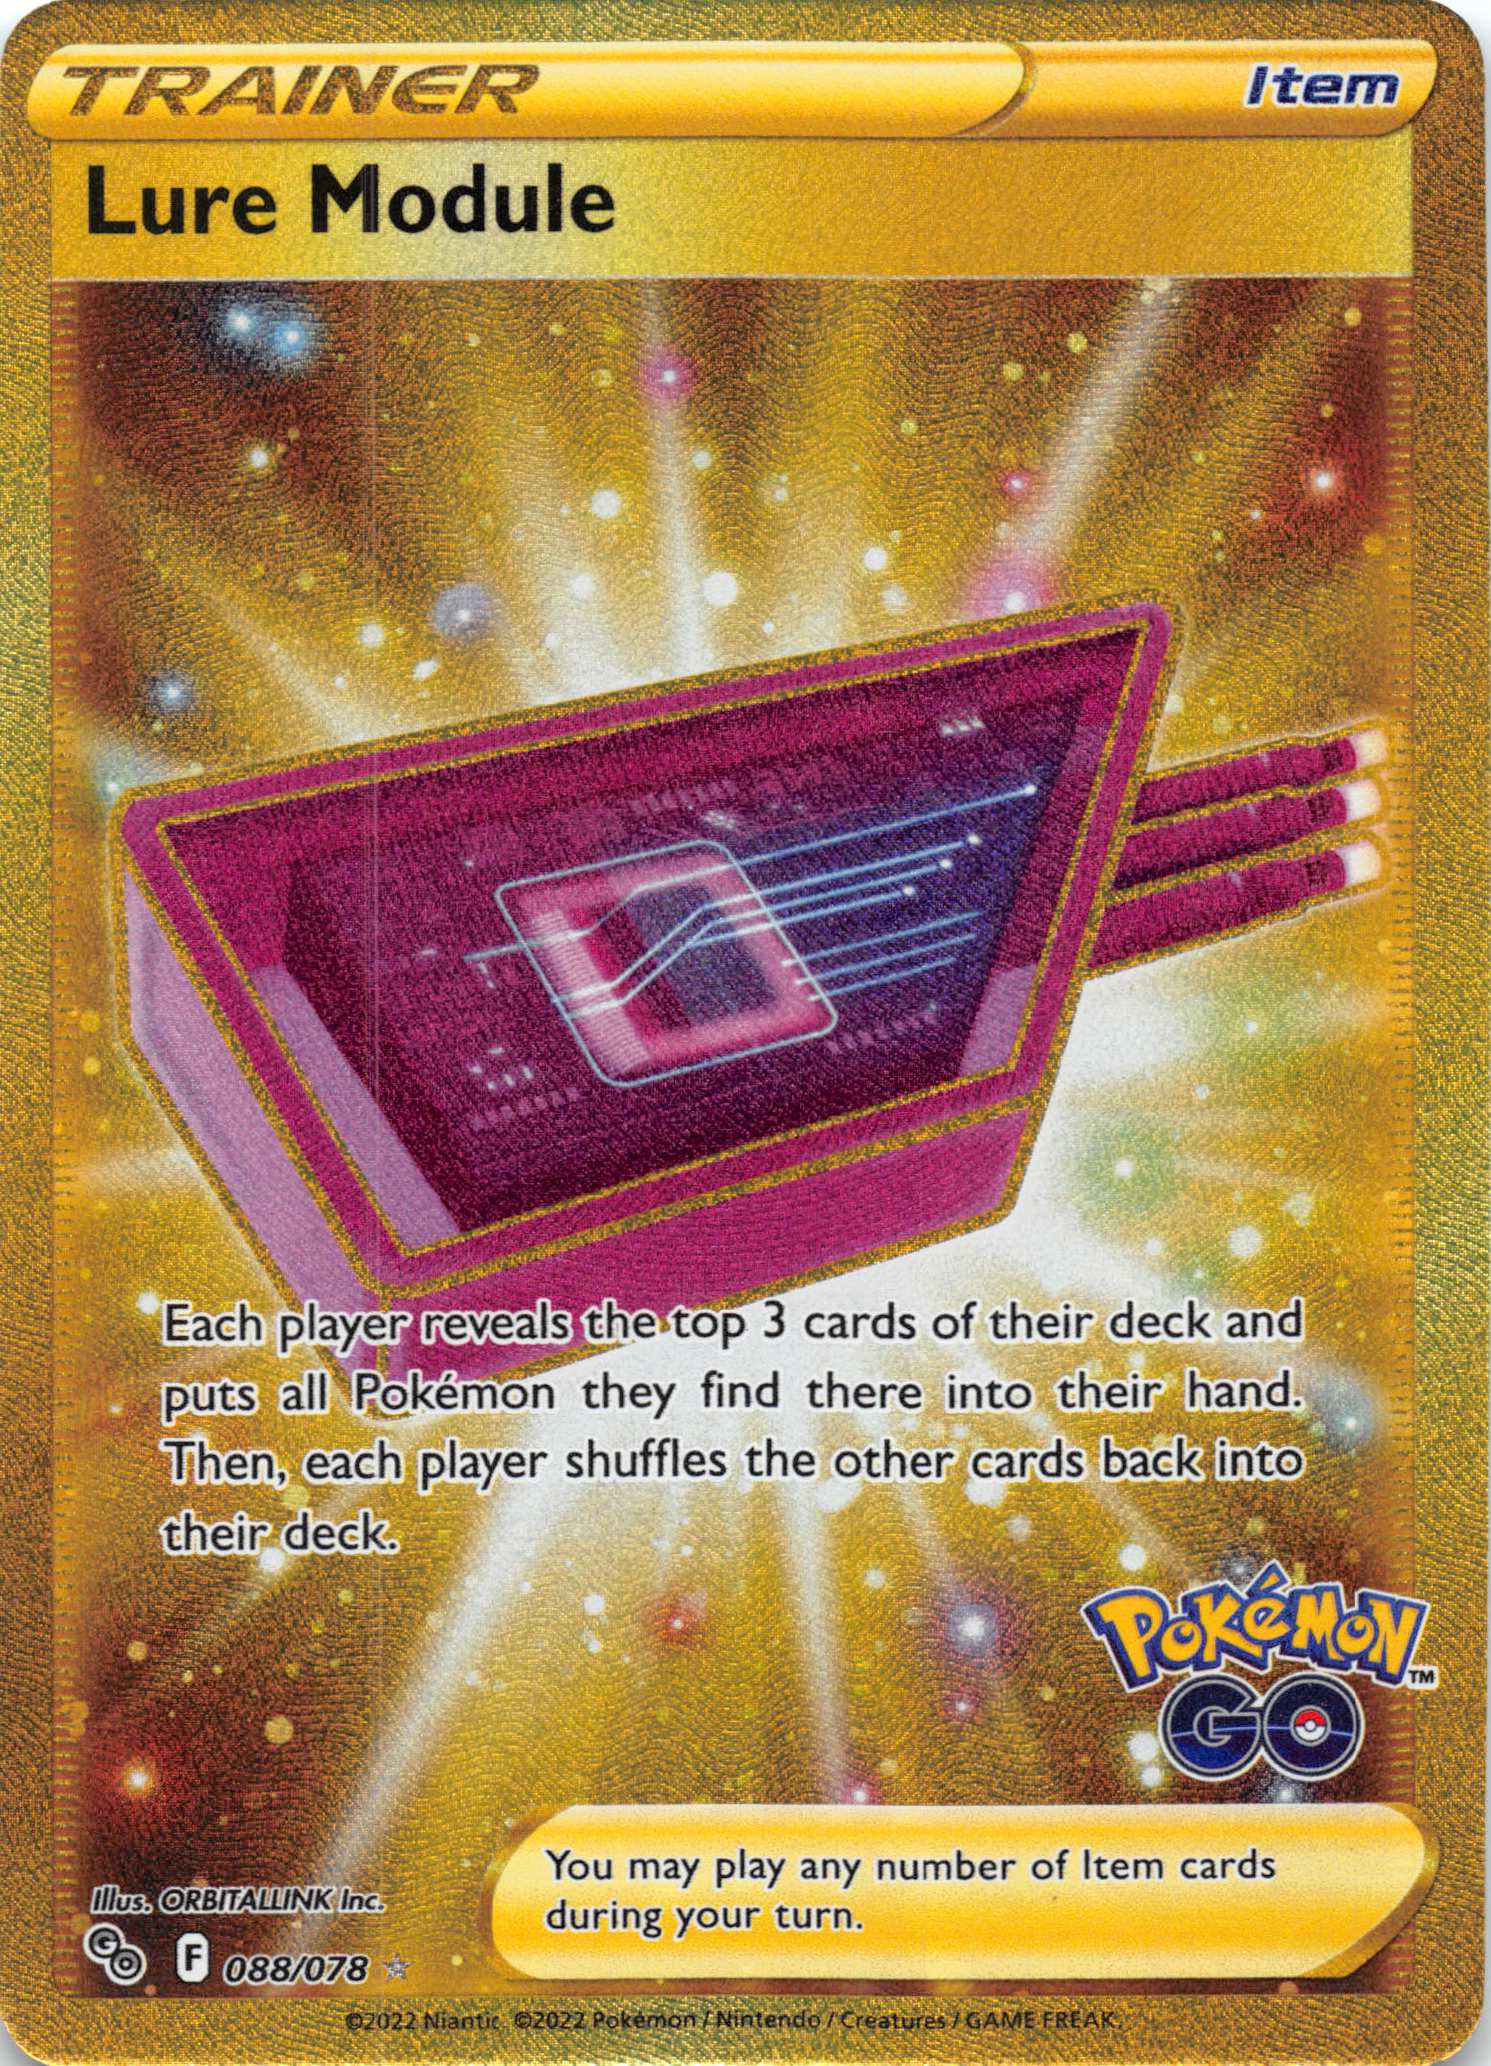 Lure Module (088/078) [Pokémon GO]